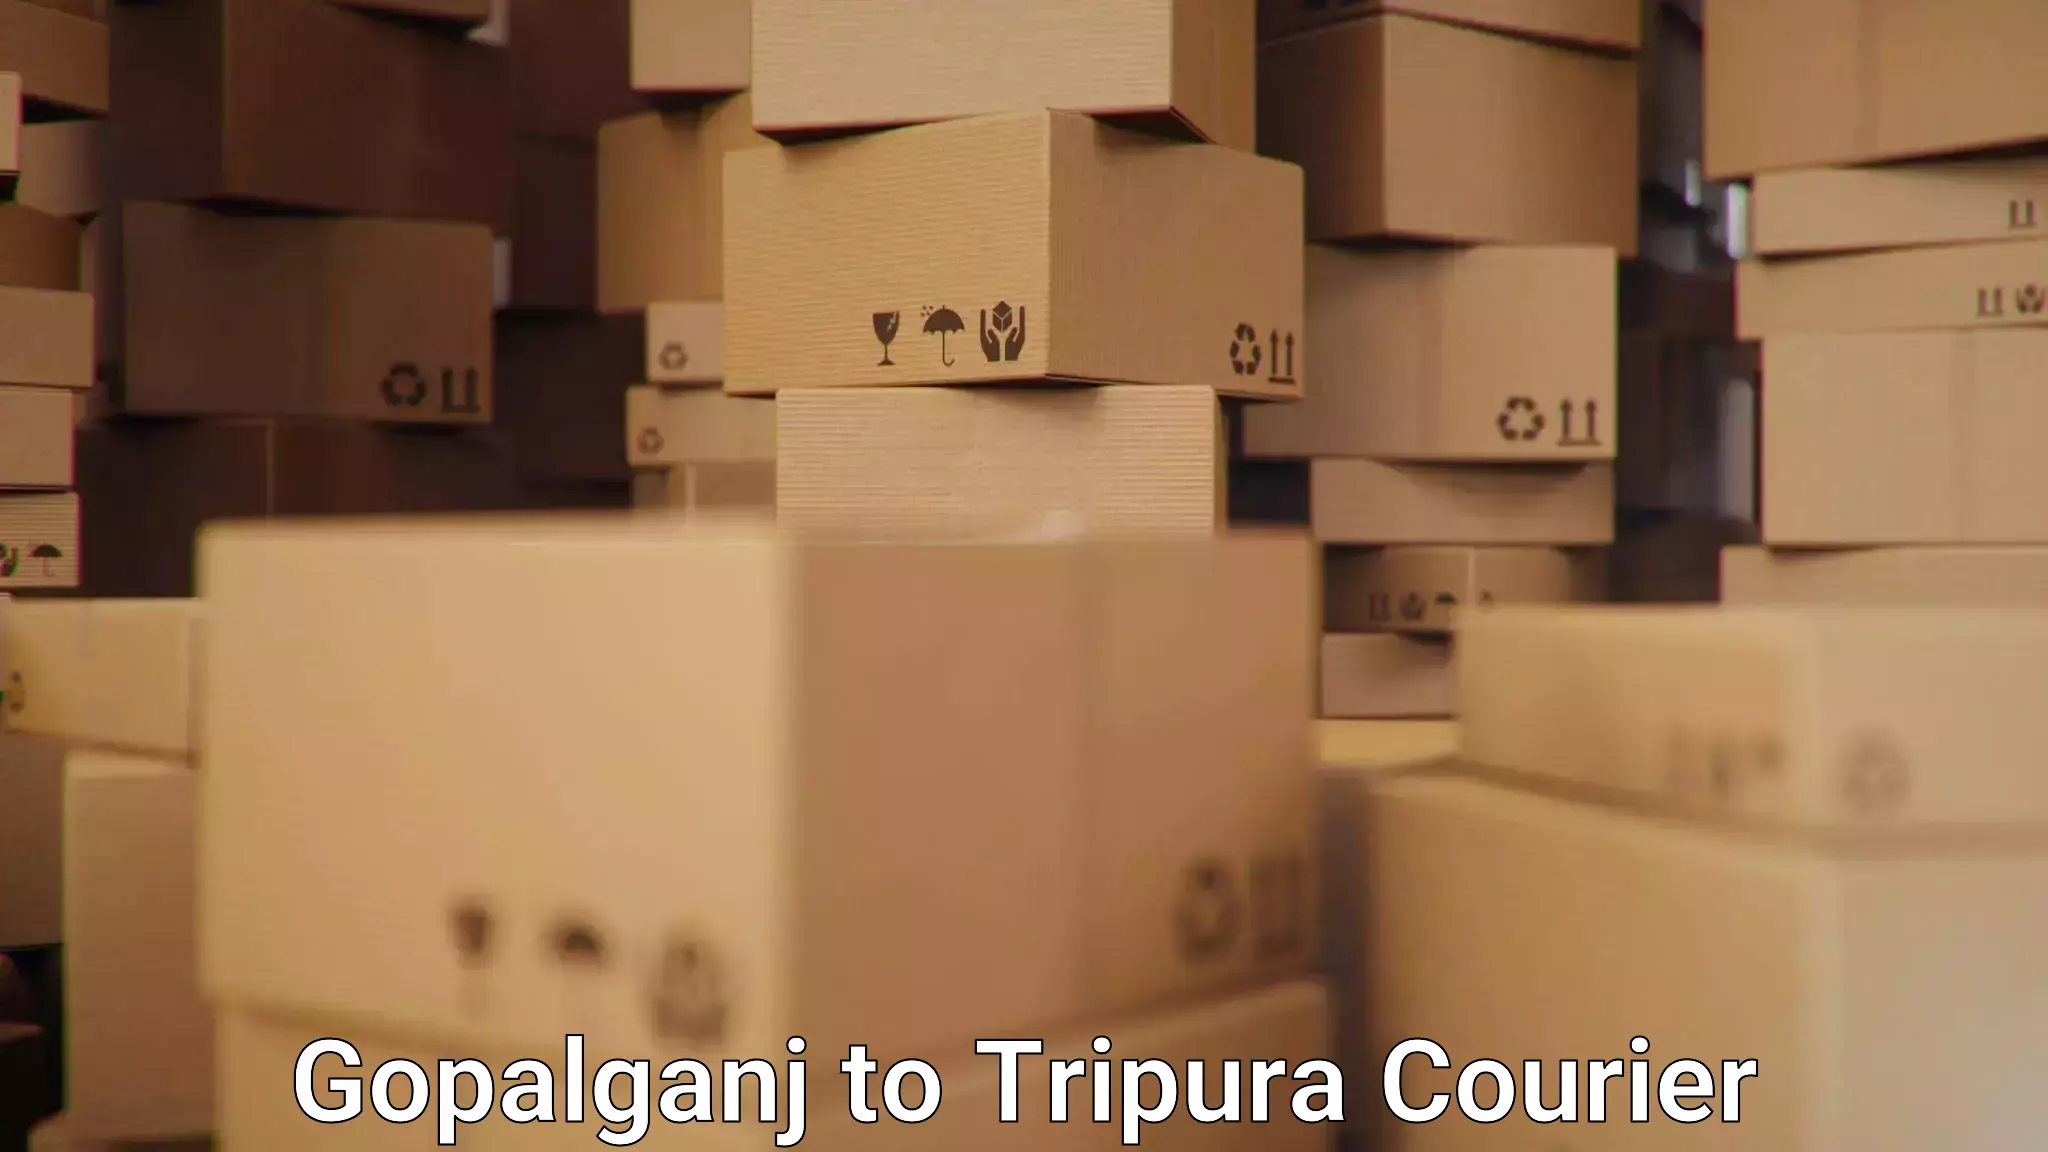 International parcel service Gopalganj to Agartala